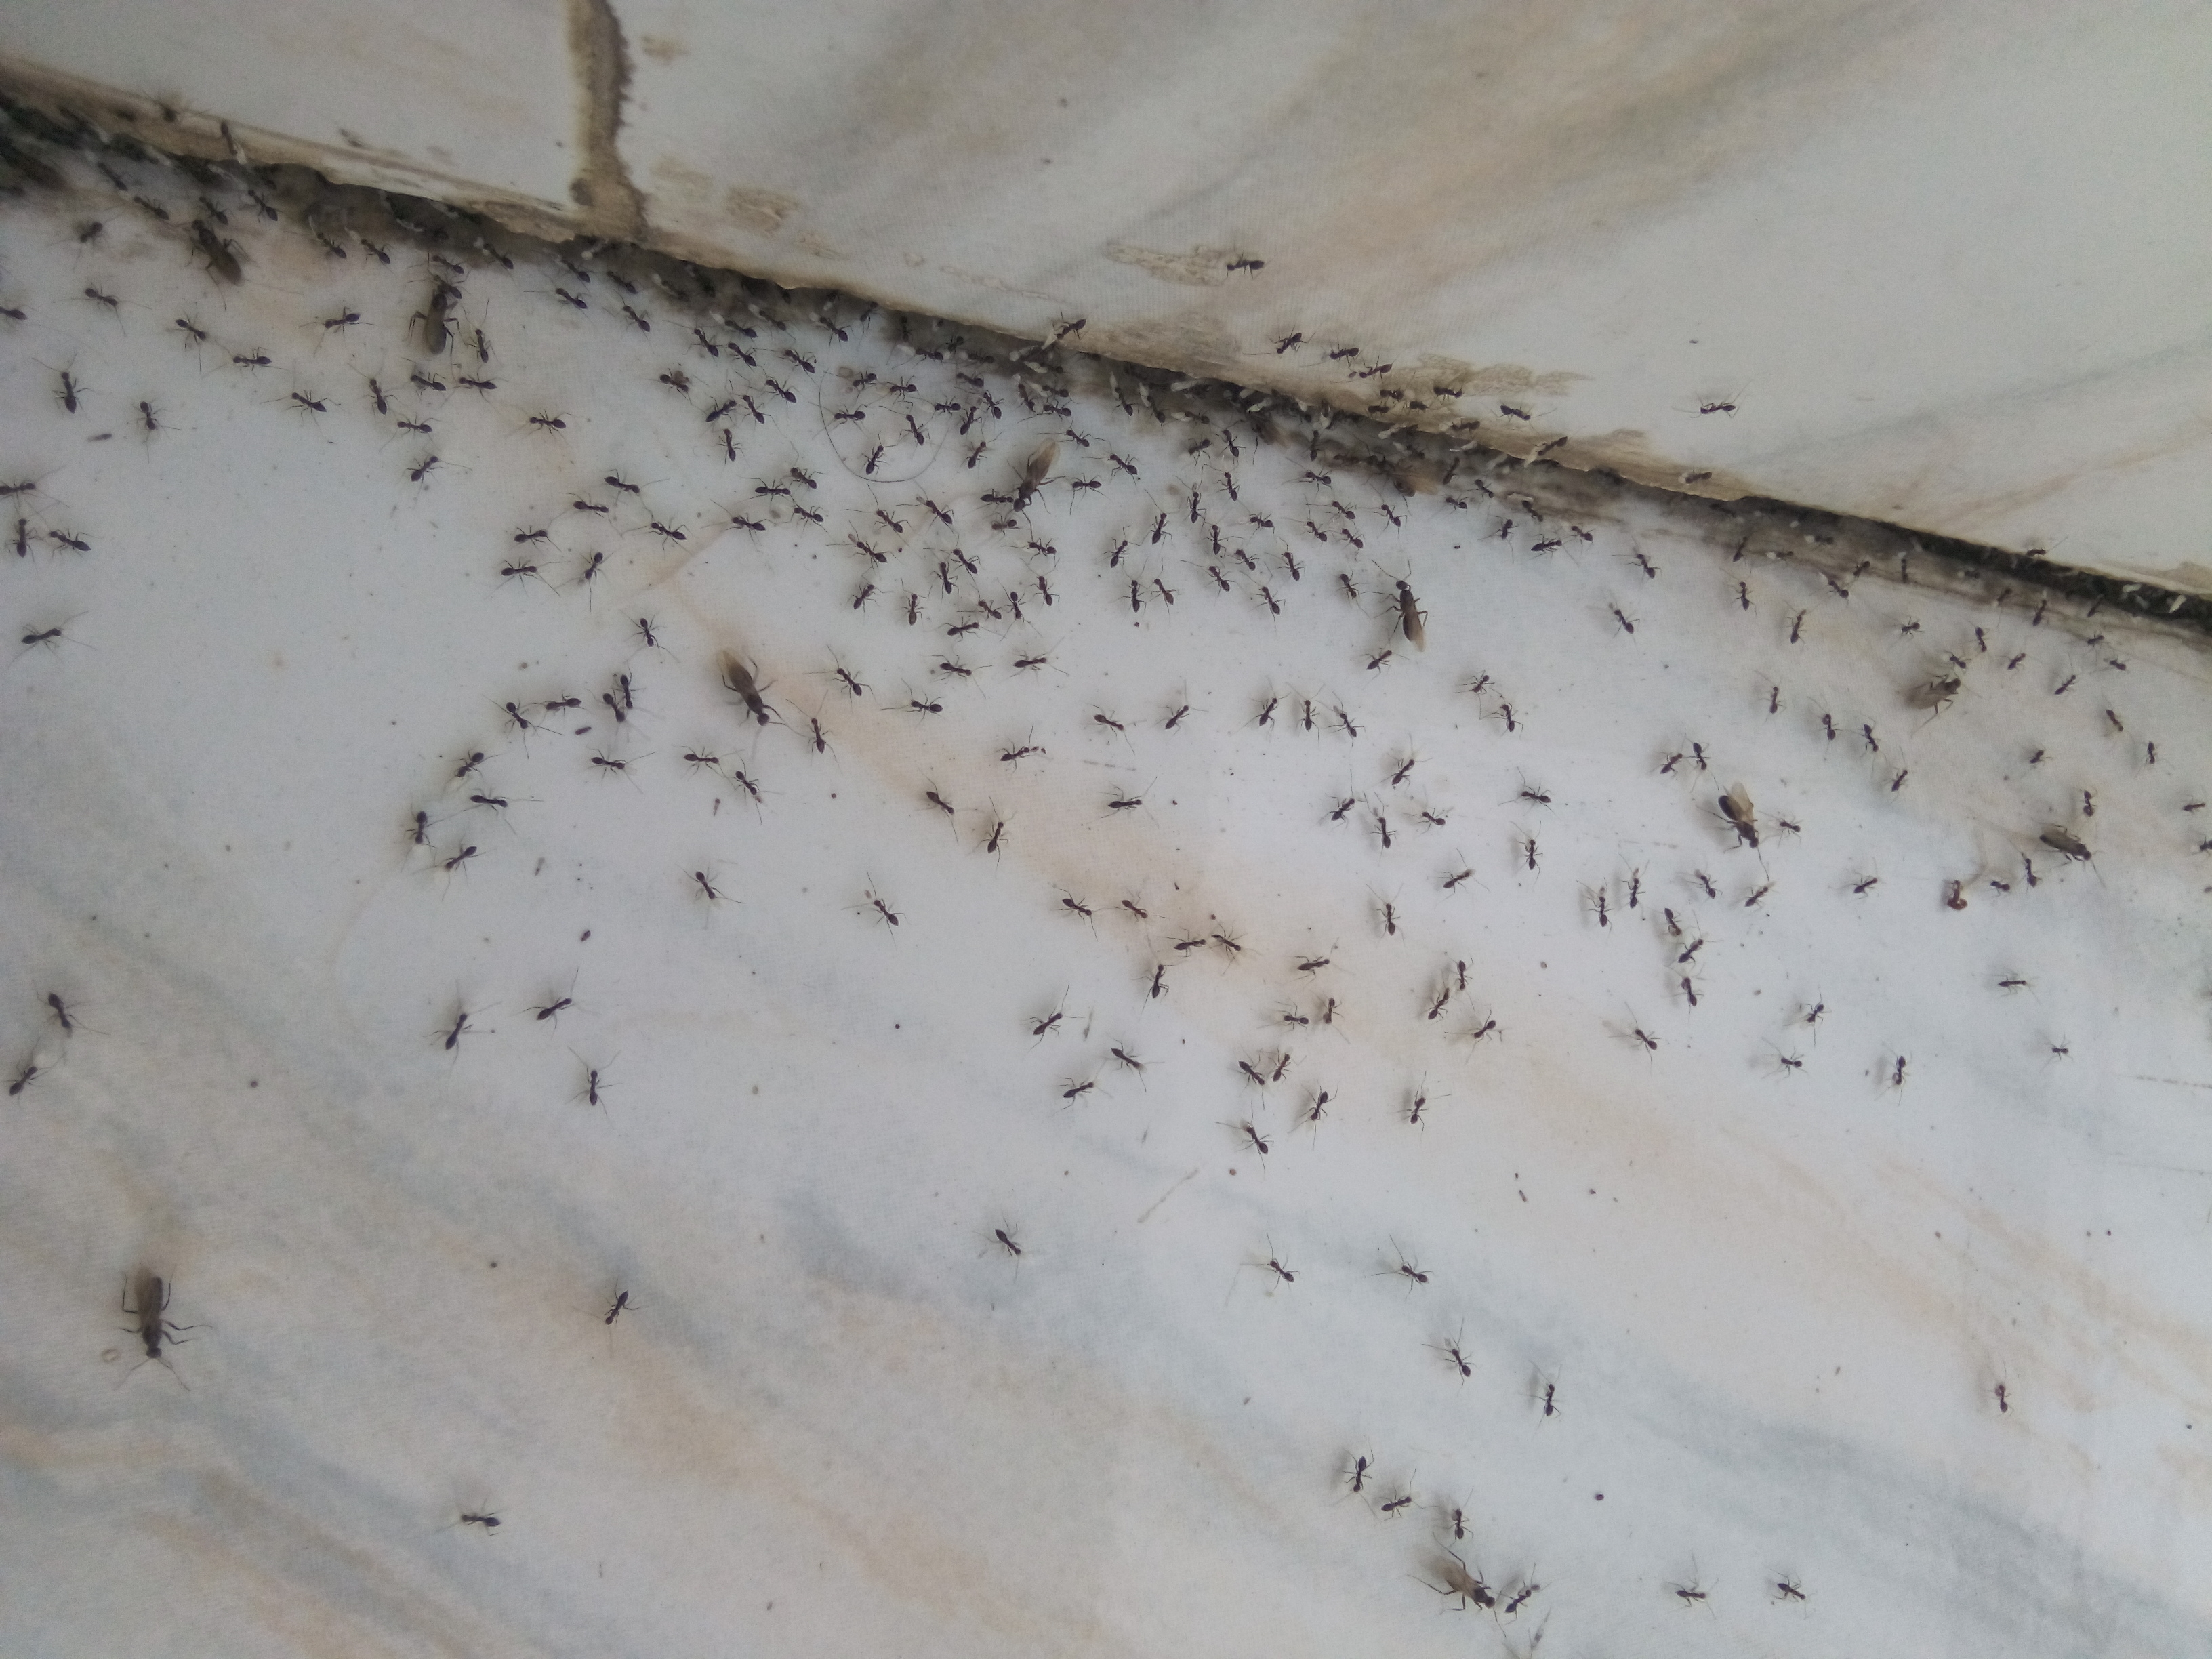 Ant infestation in Bexley